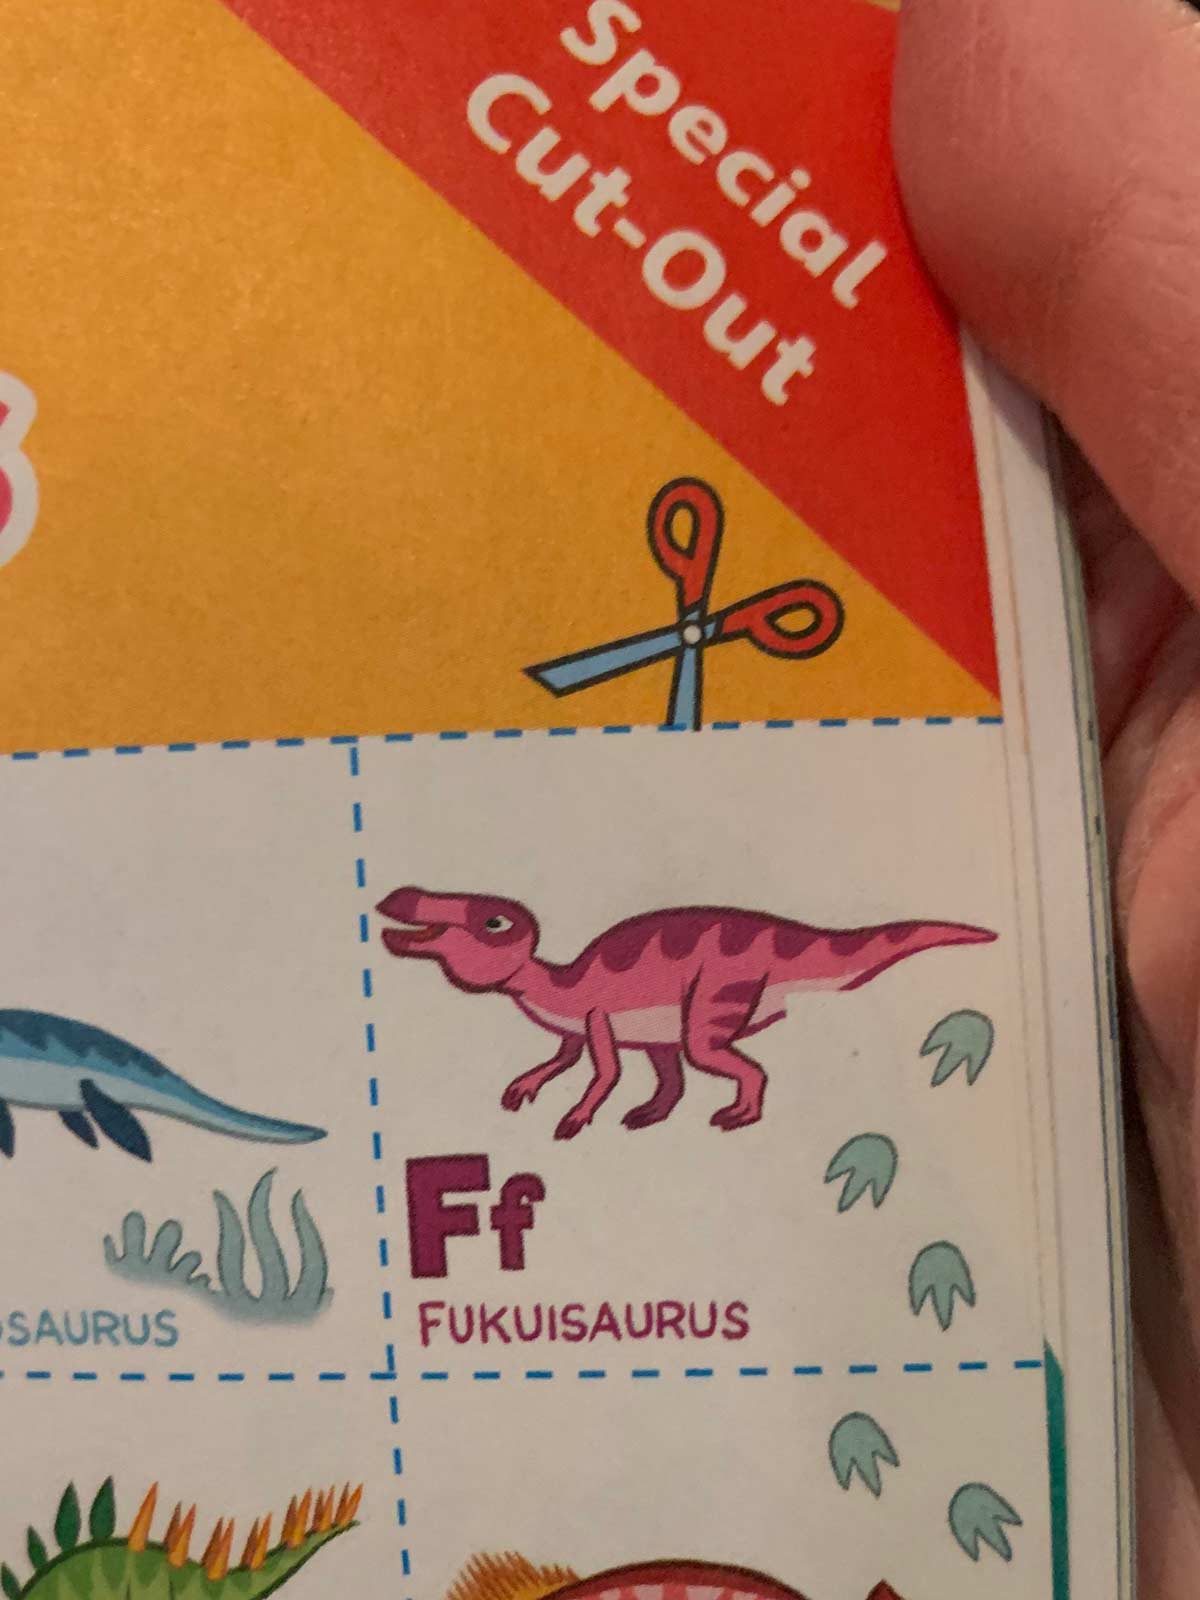 How do you pronounce this dinosaur's name?